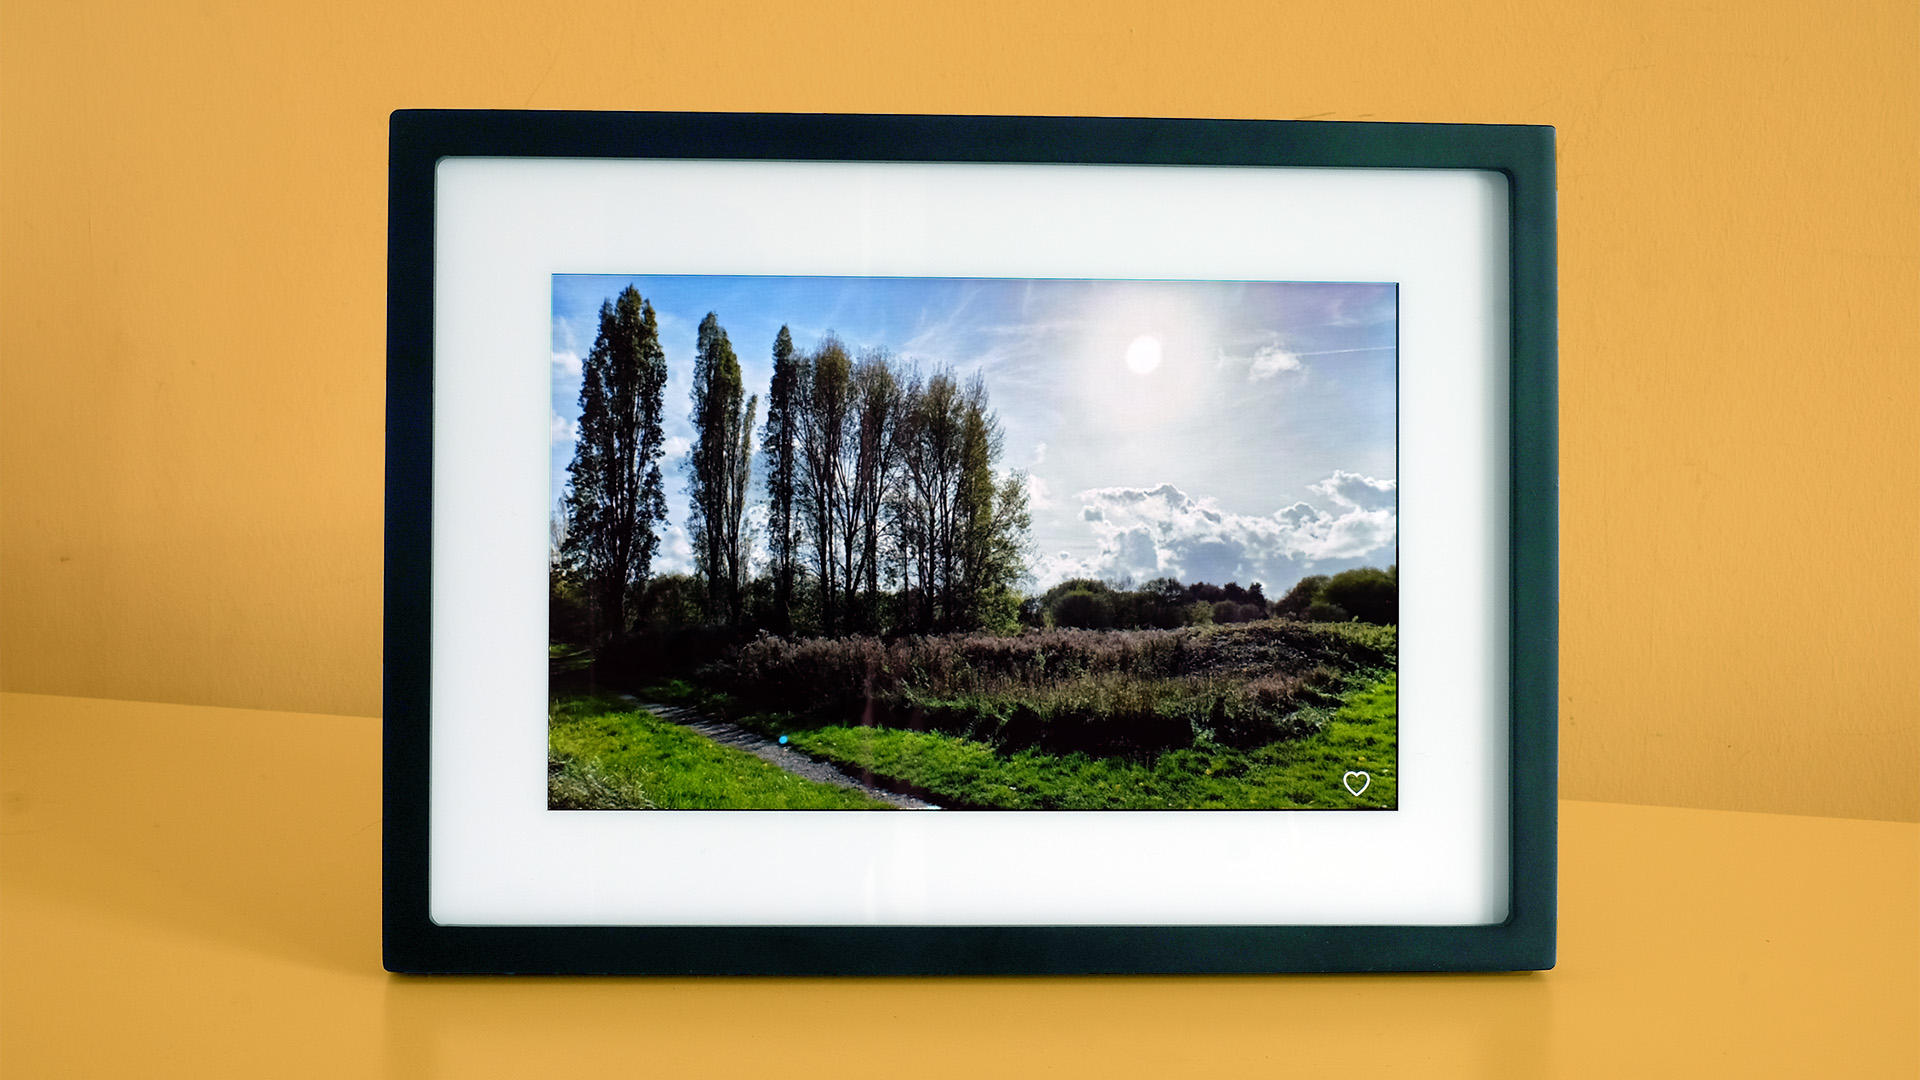 Skylight photo frame